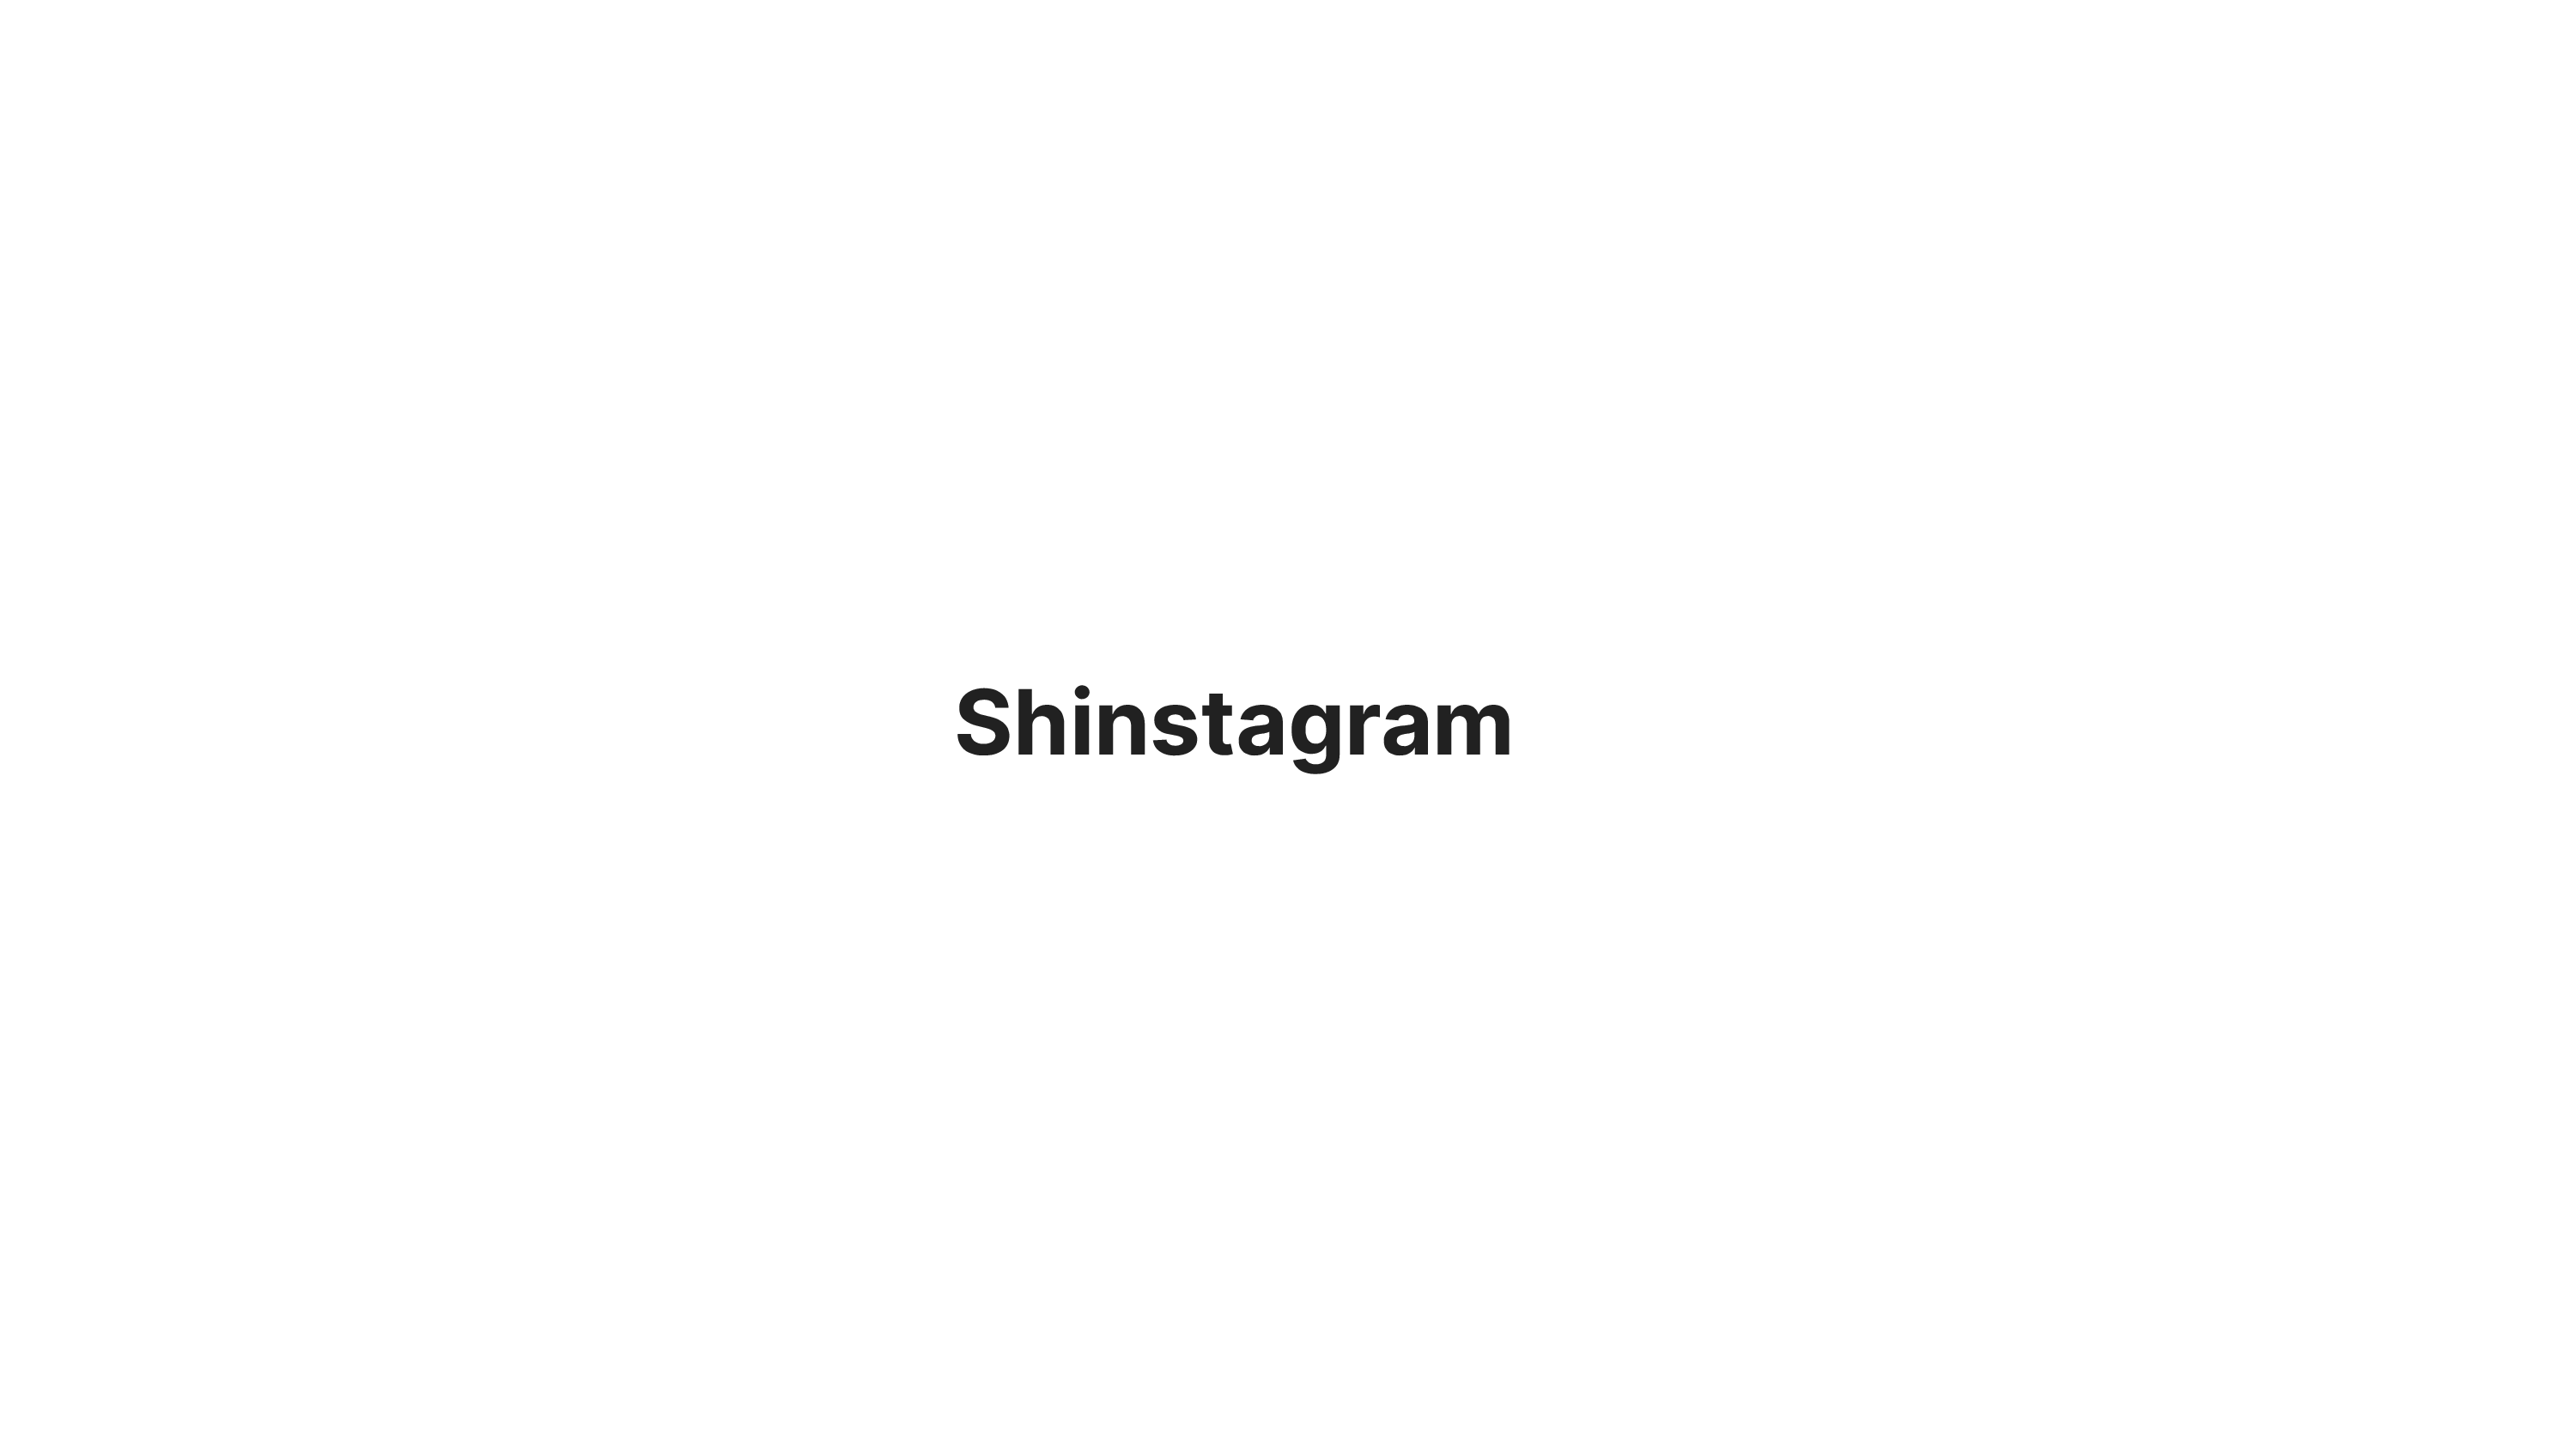 Shinstagram
